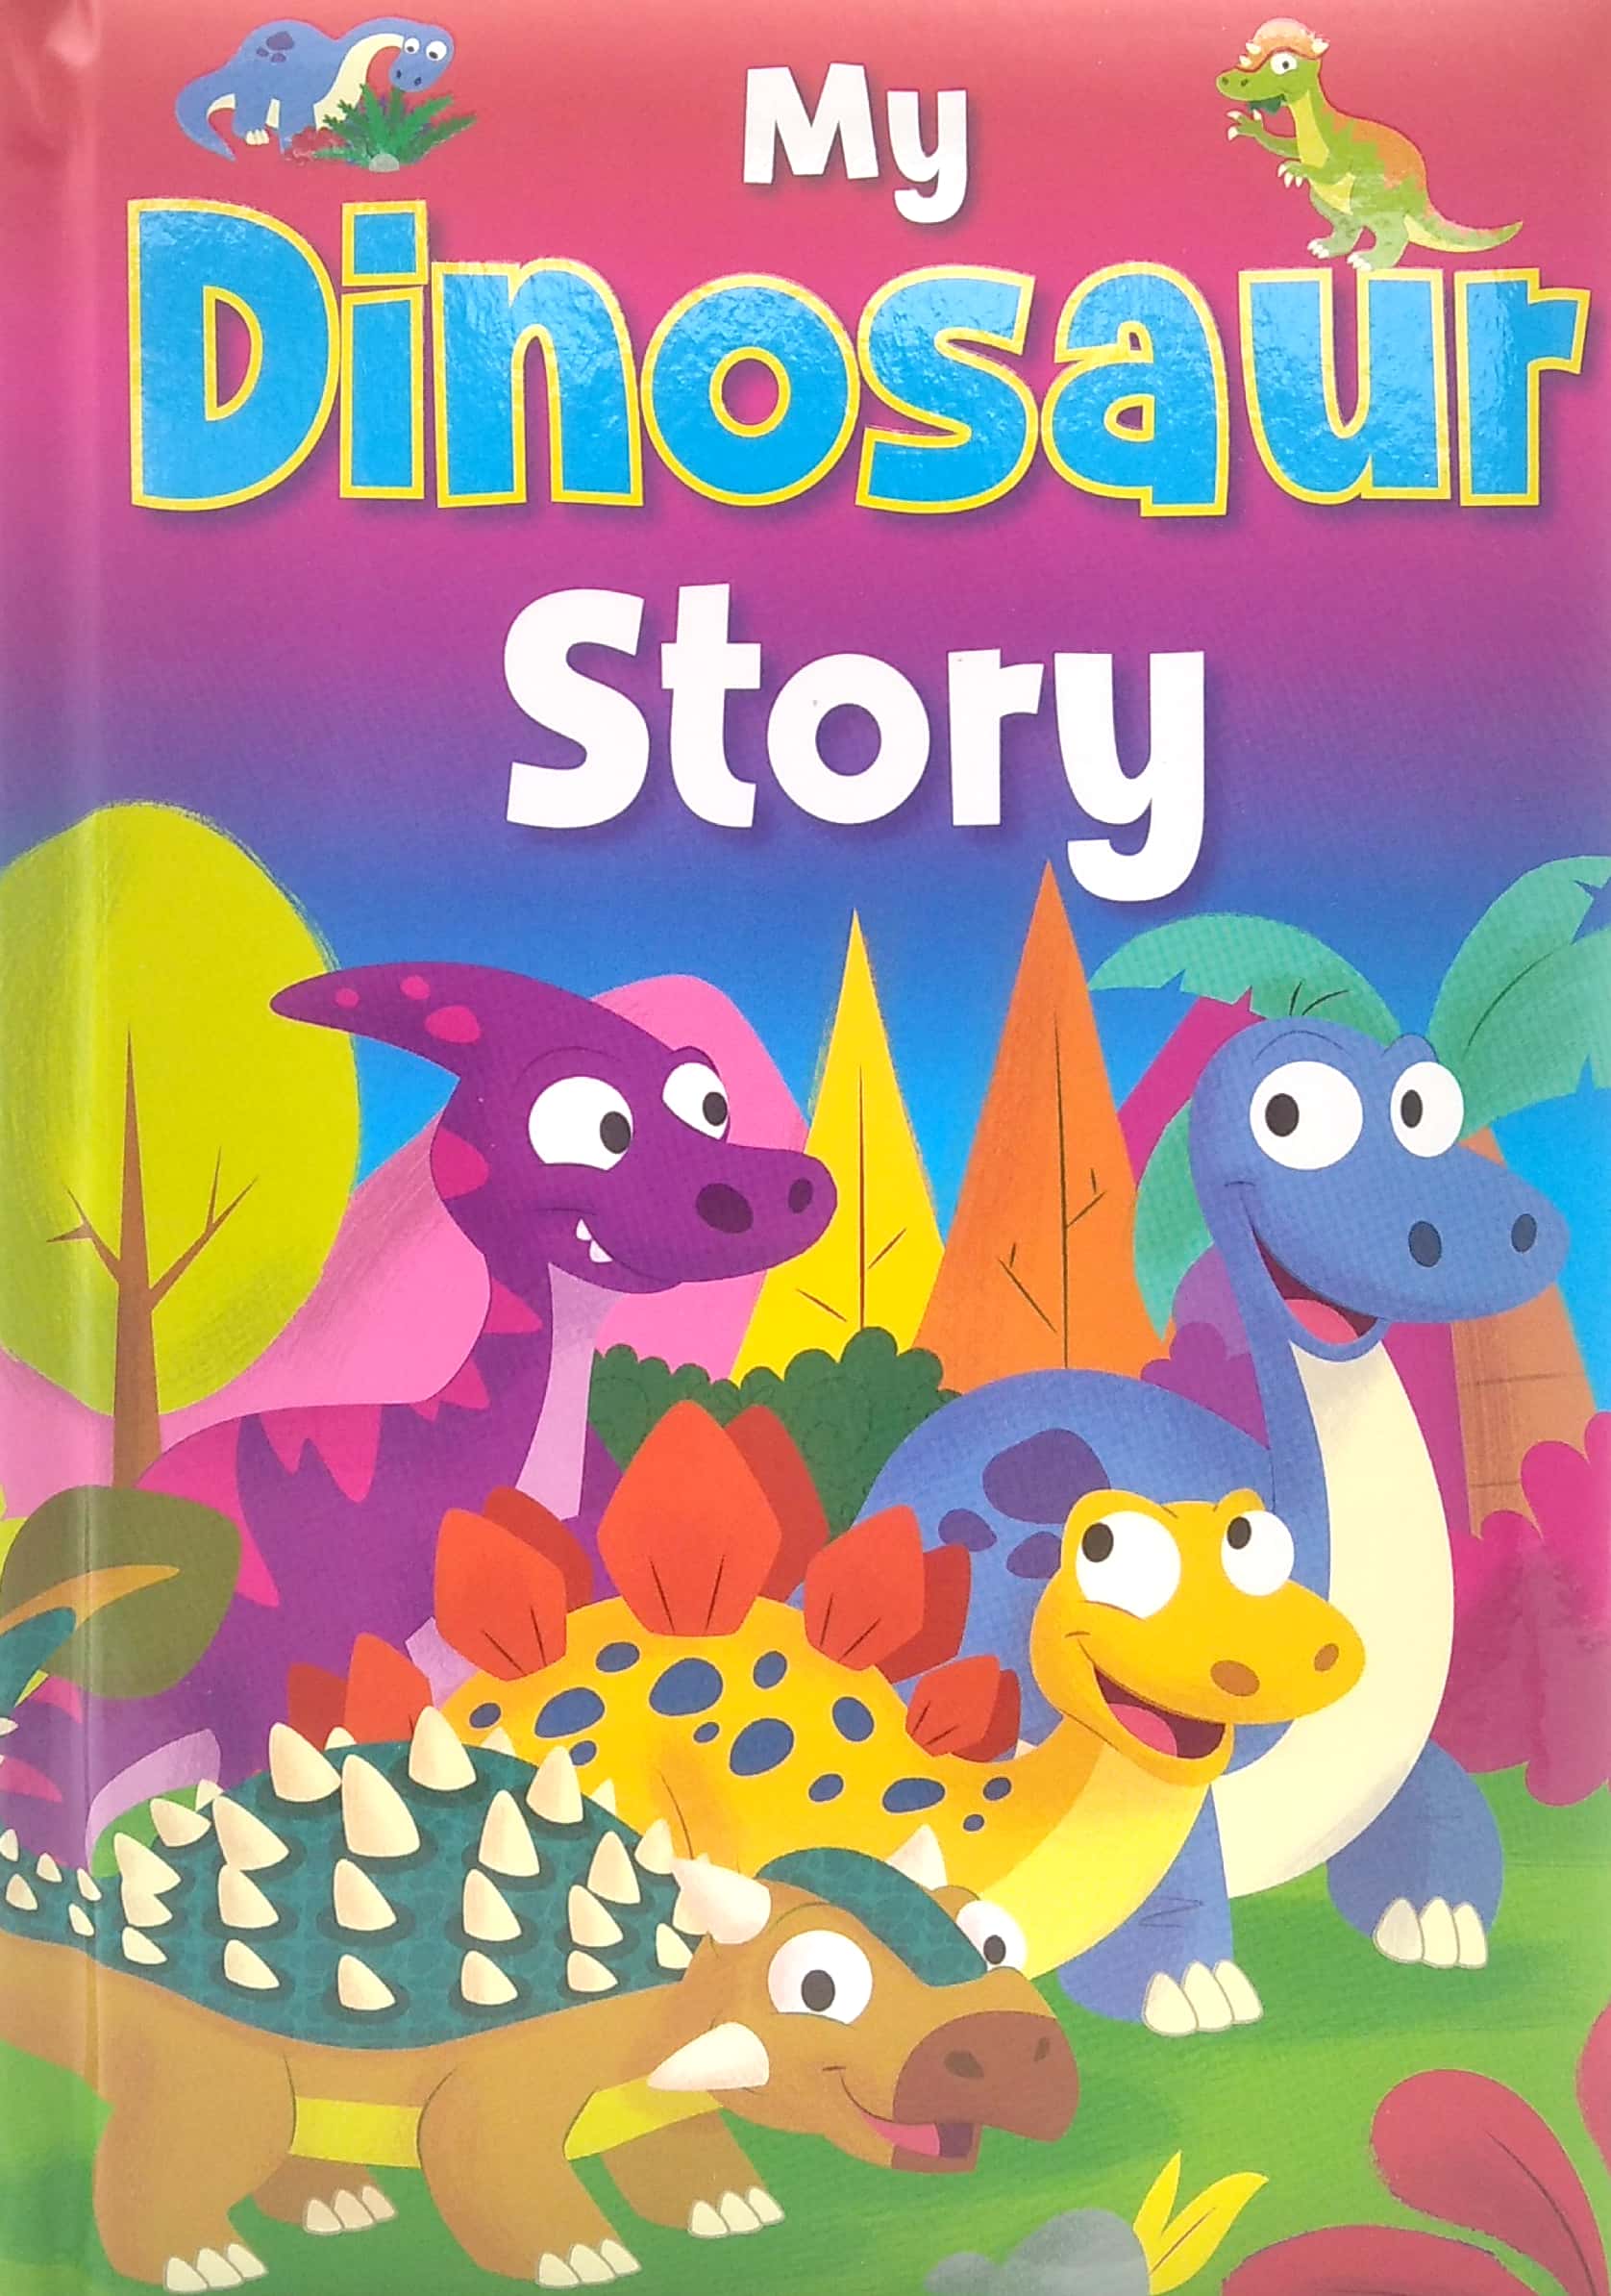 My Dinosaur Story